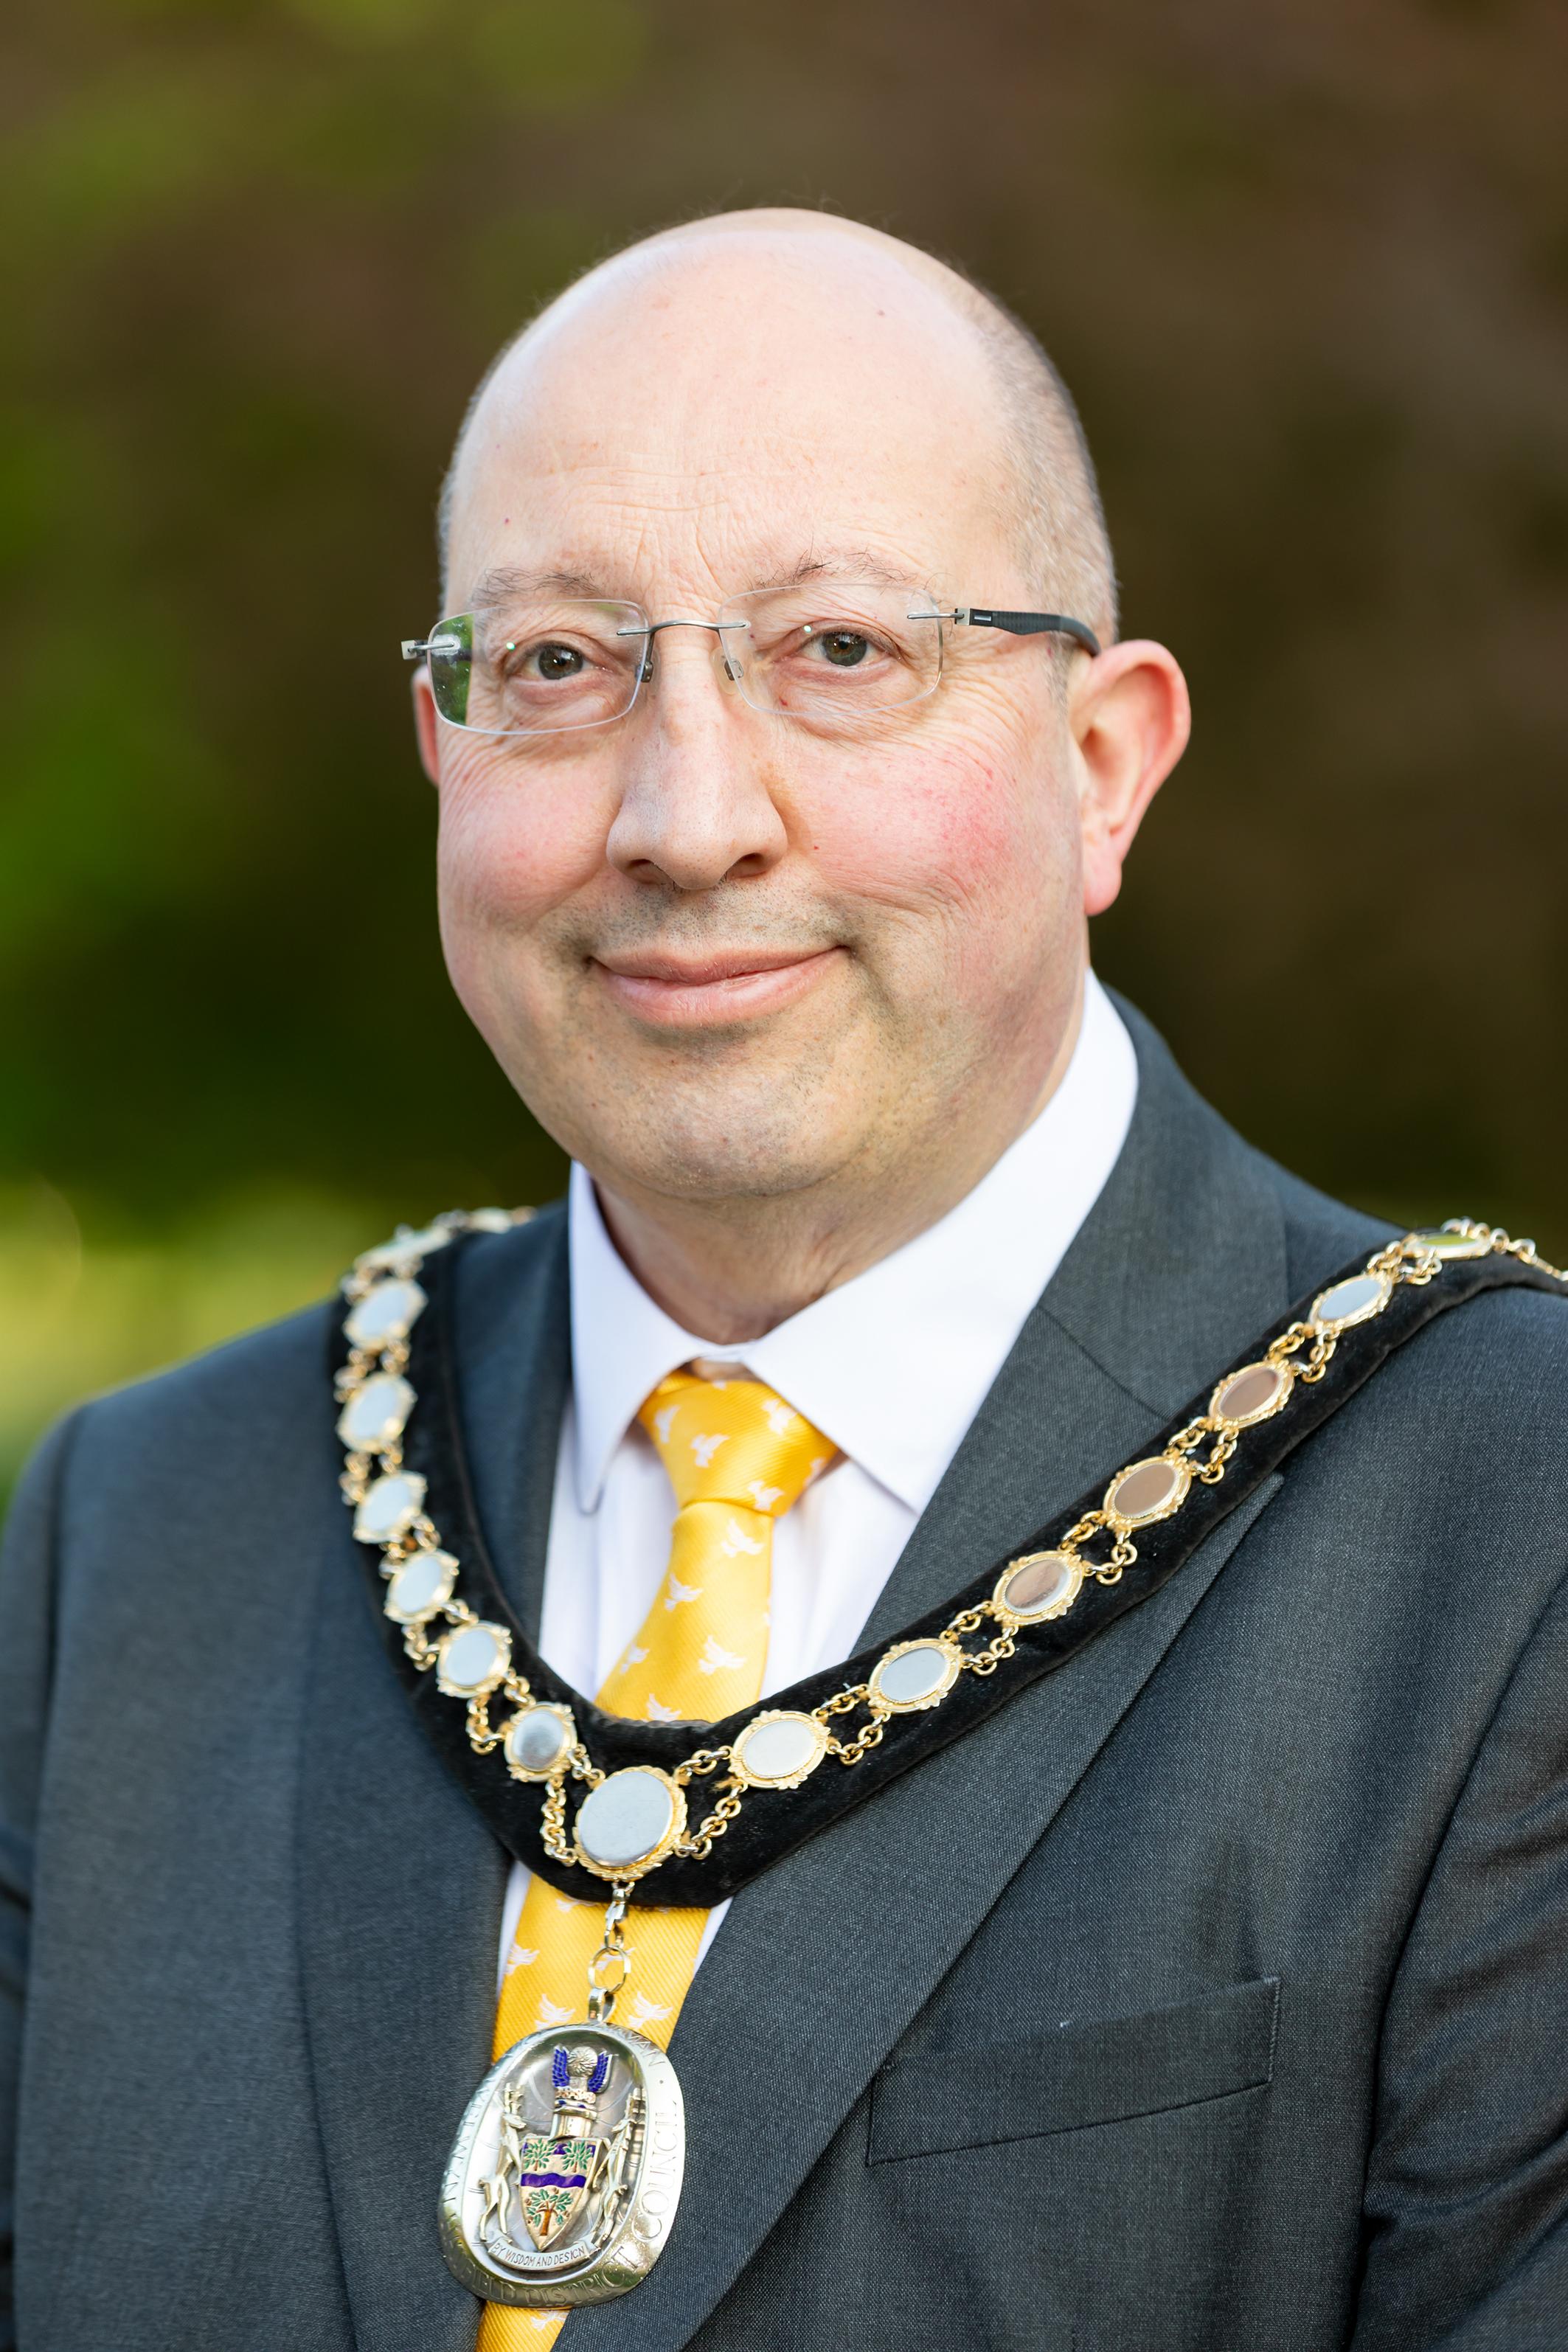 Portrait of the Deputy Mayor